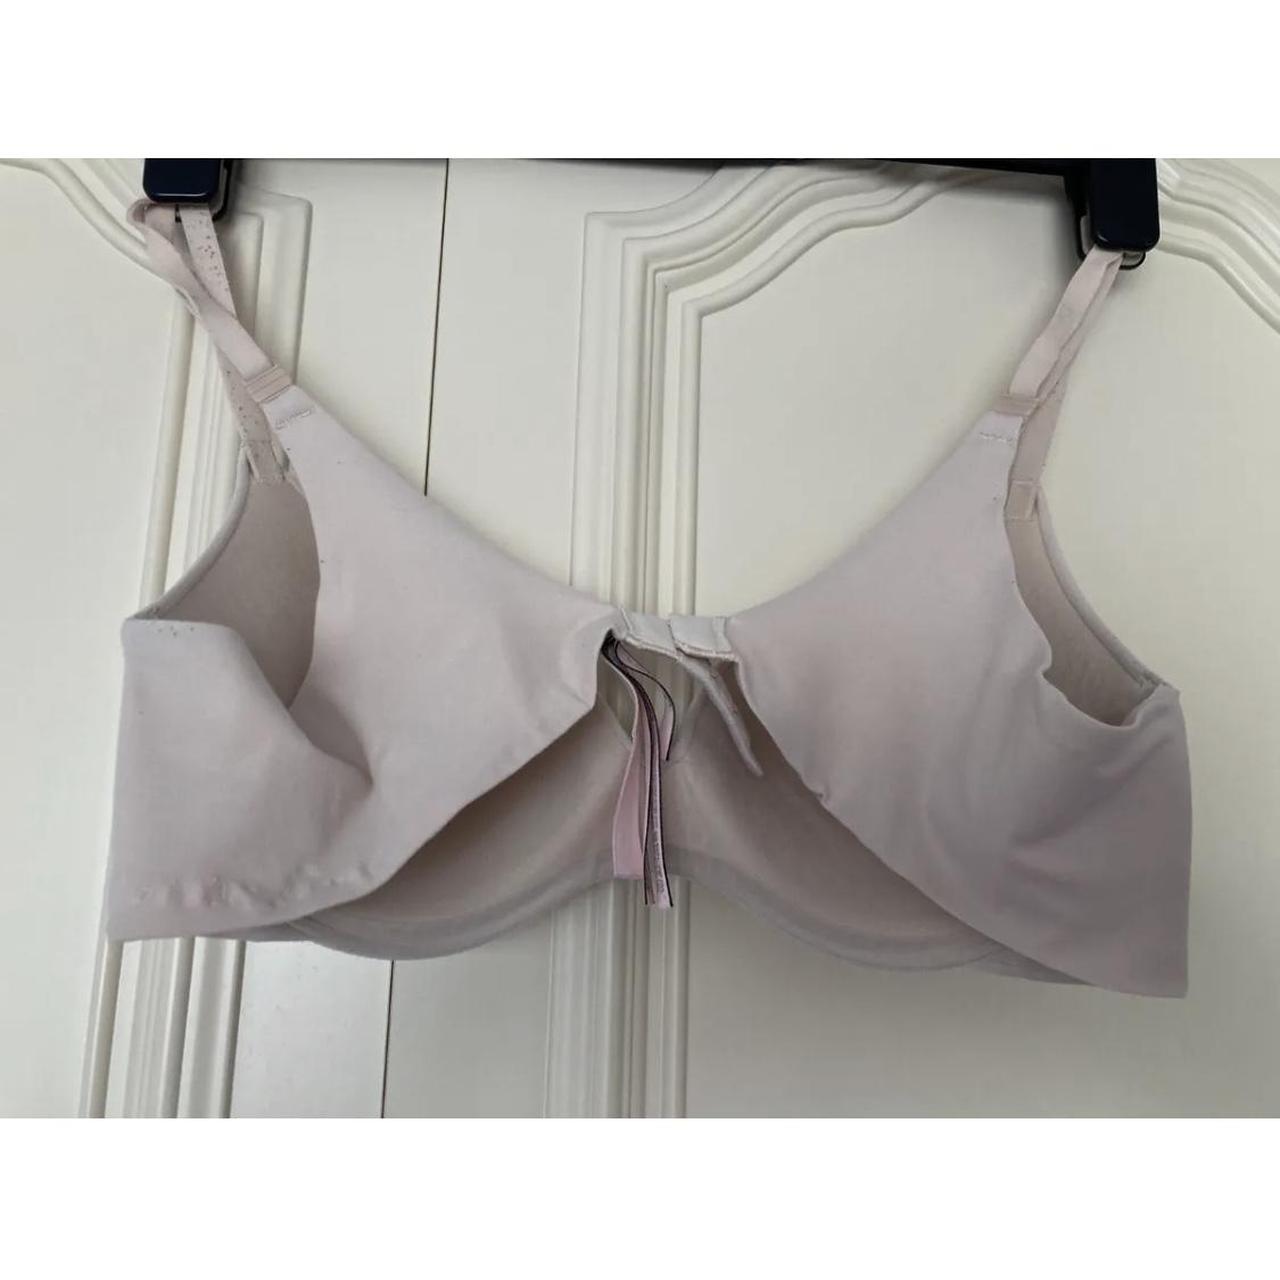 Victoria's Secret nude bra with adjustable straps,... - Depop